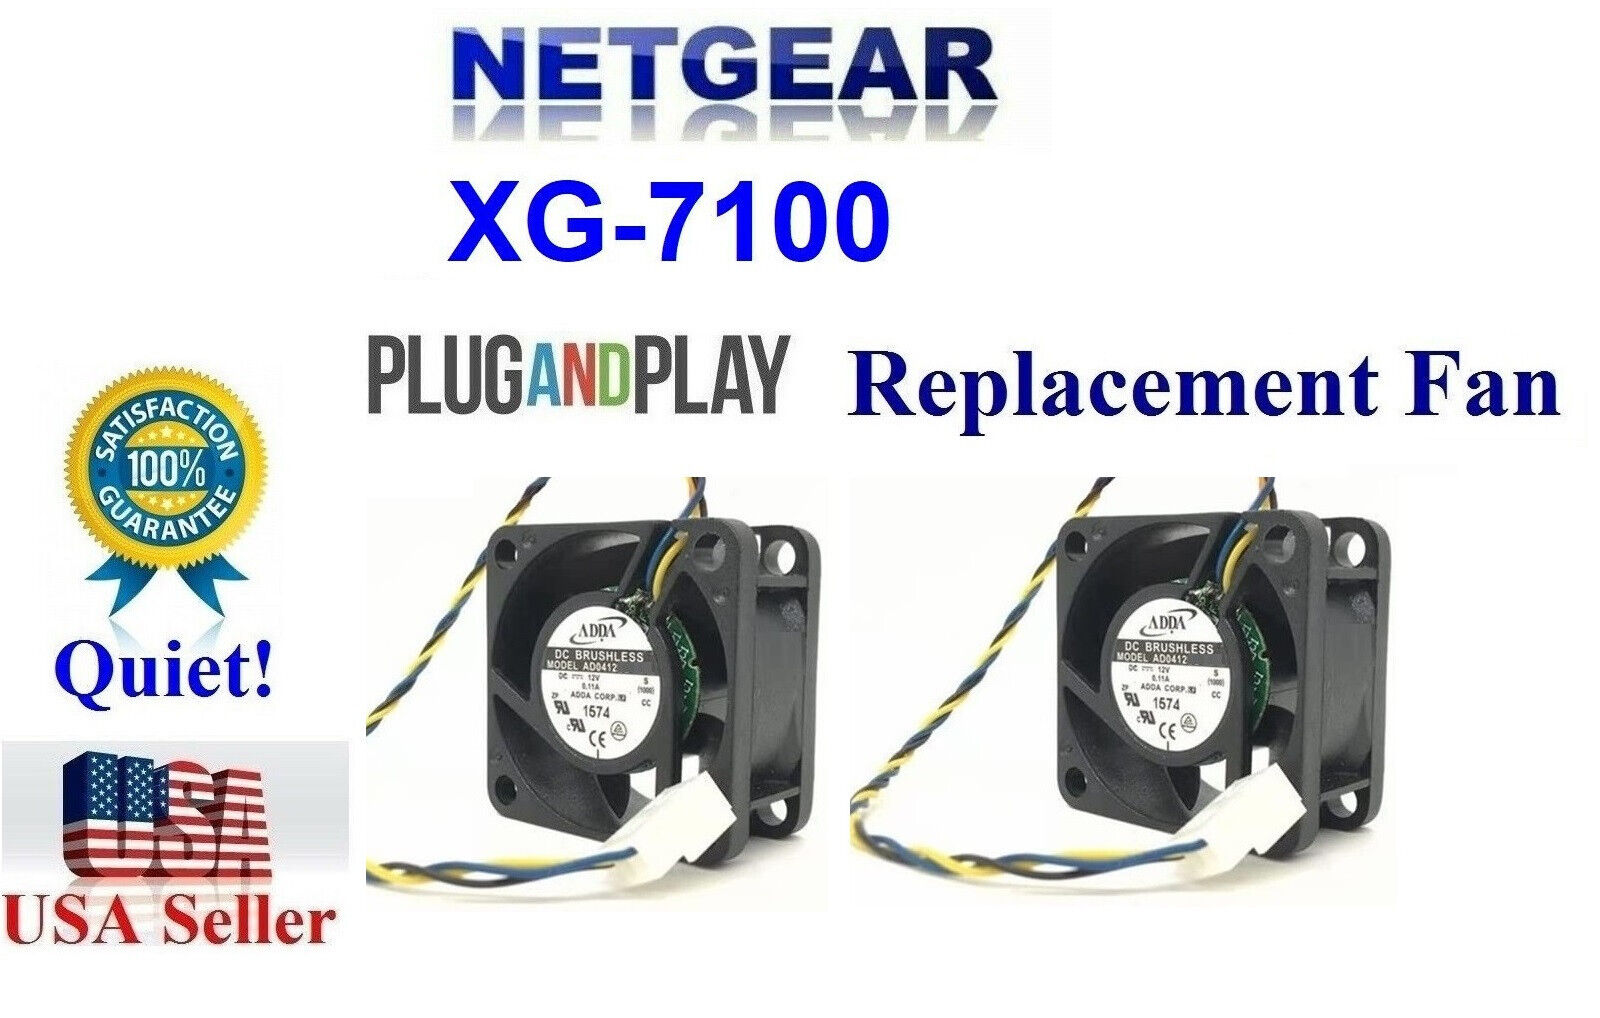 2 Pack Quiet Version Replacement Fans for Netgate XG-7100 Security Gateway